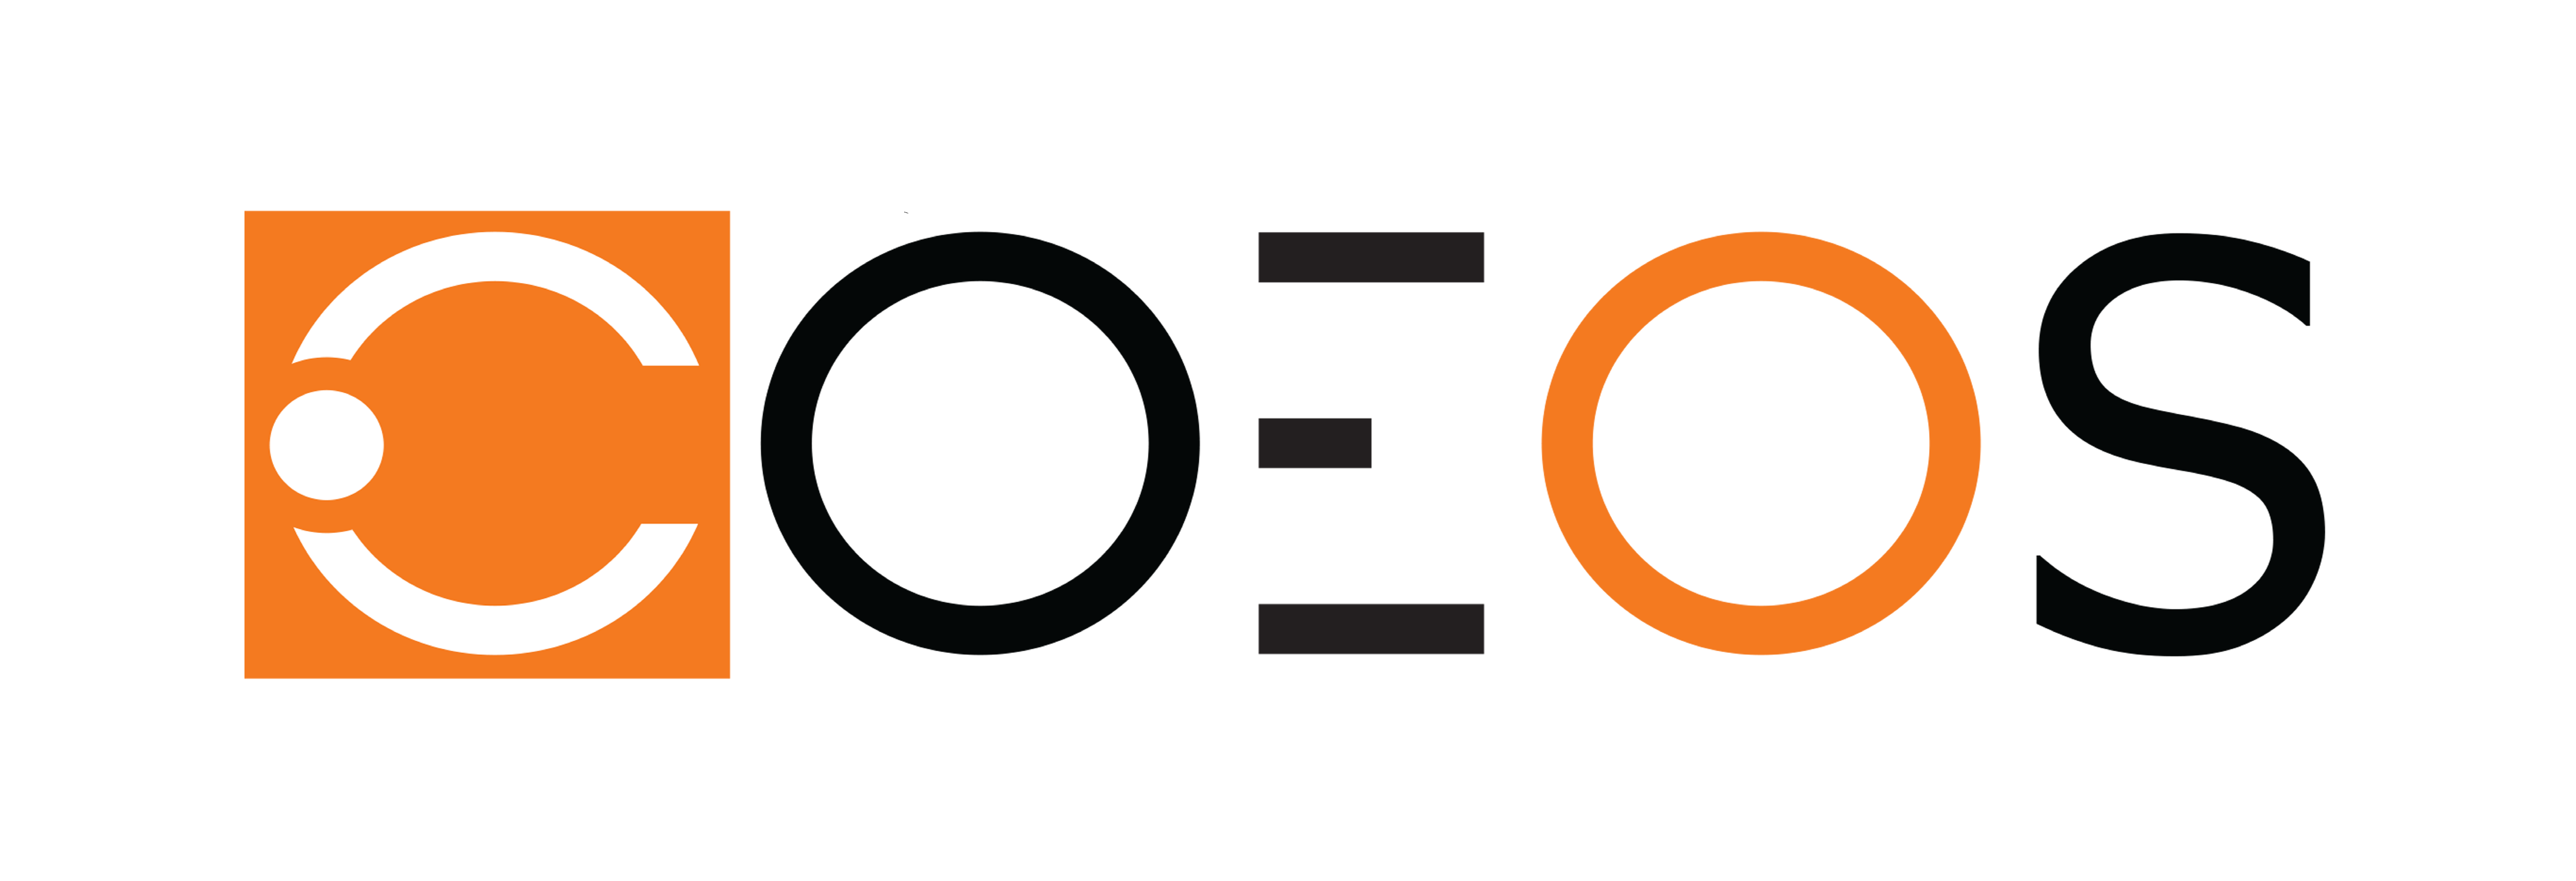 logo-coeos-formation